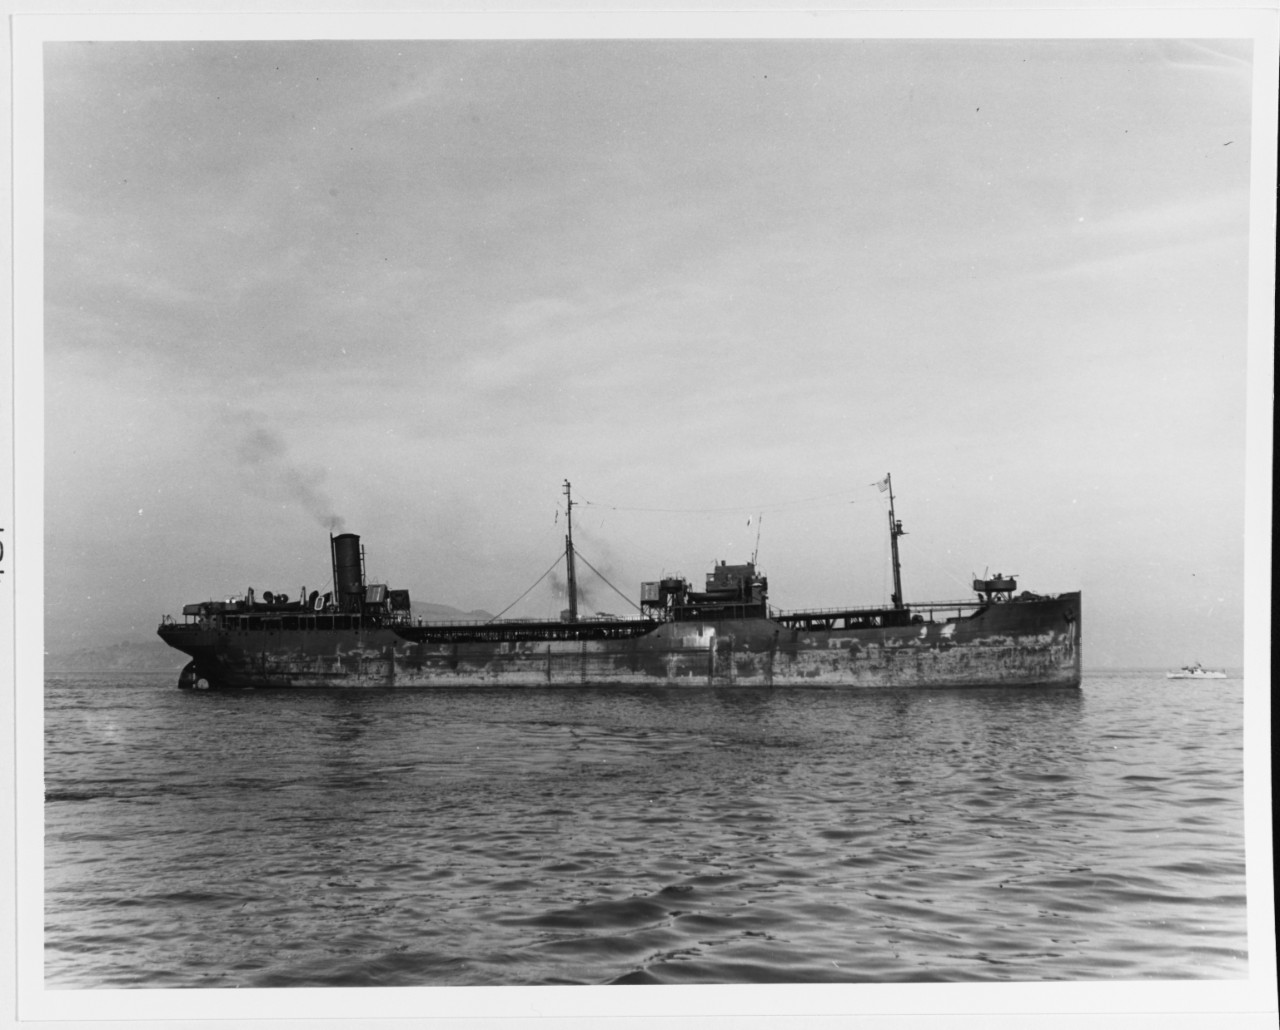 S.S. YORBA LINDA (Panamanian Merchant Tanker, 1921-1952)